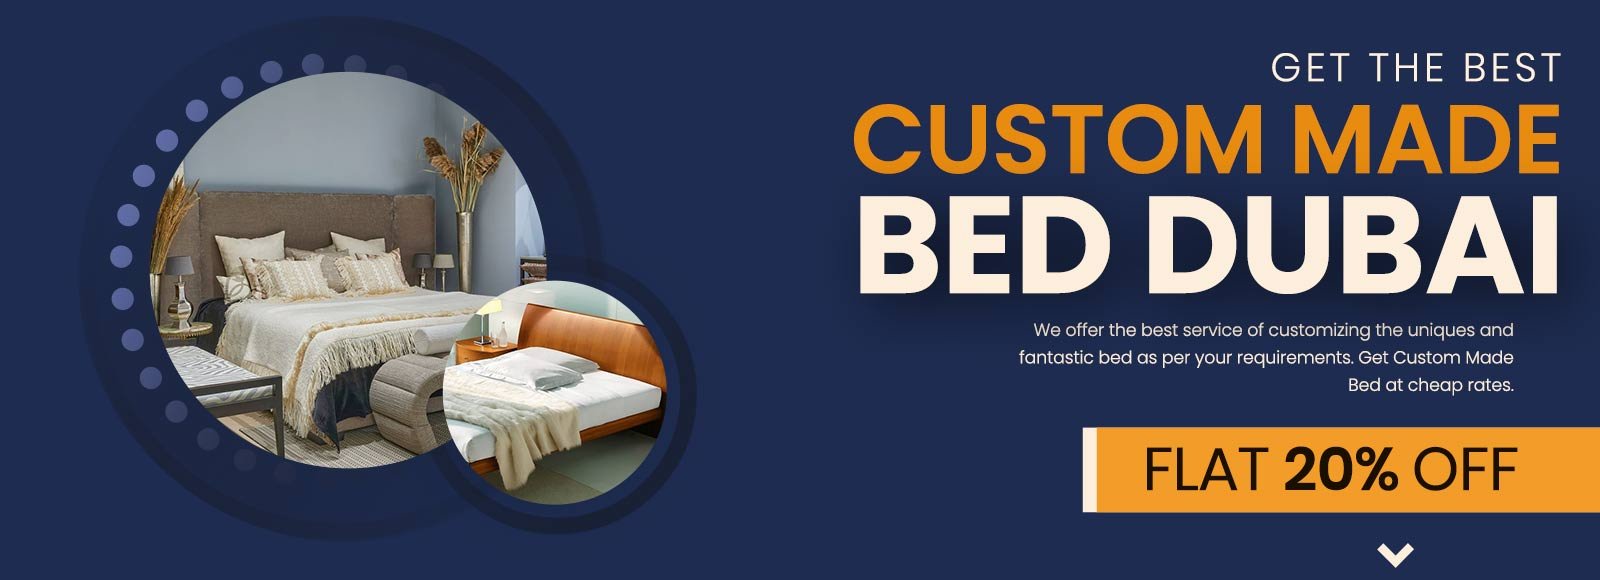 Custom-made-bed